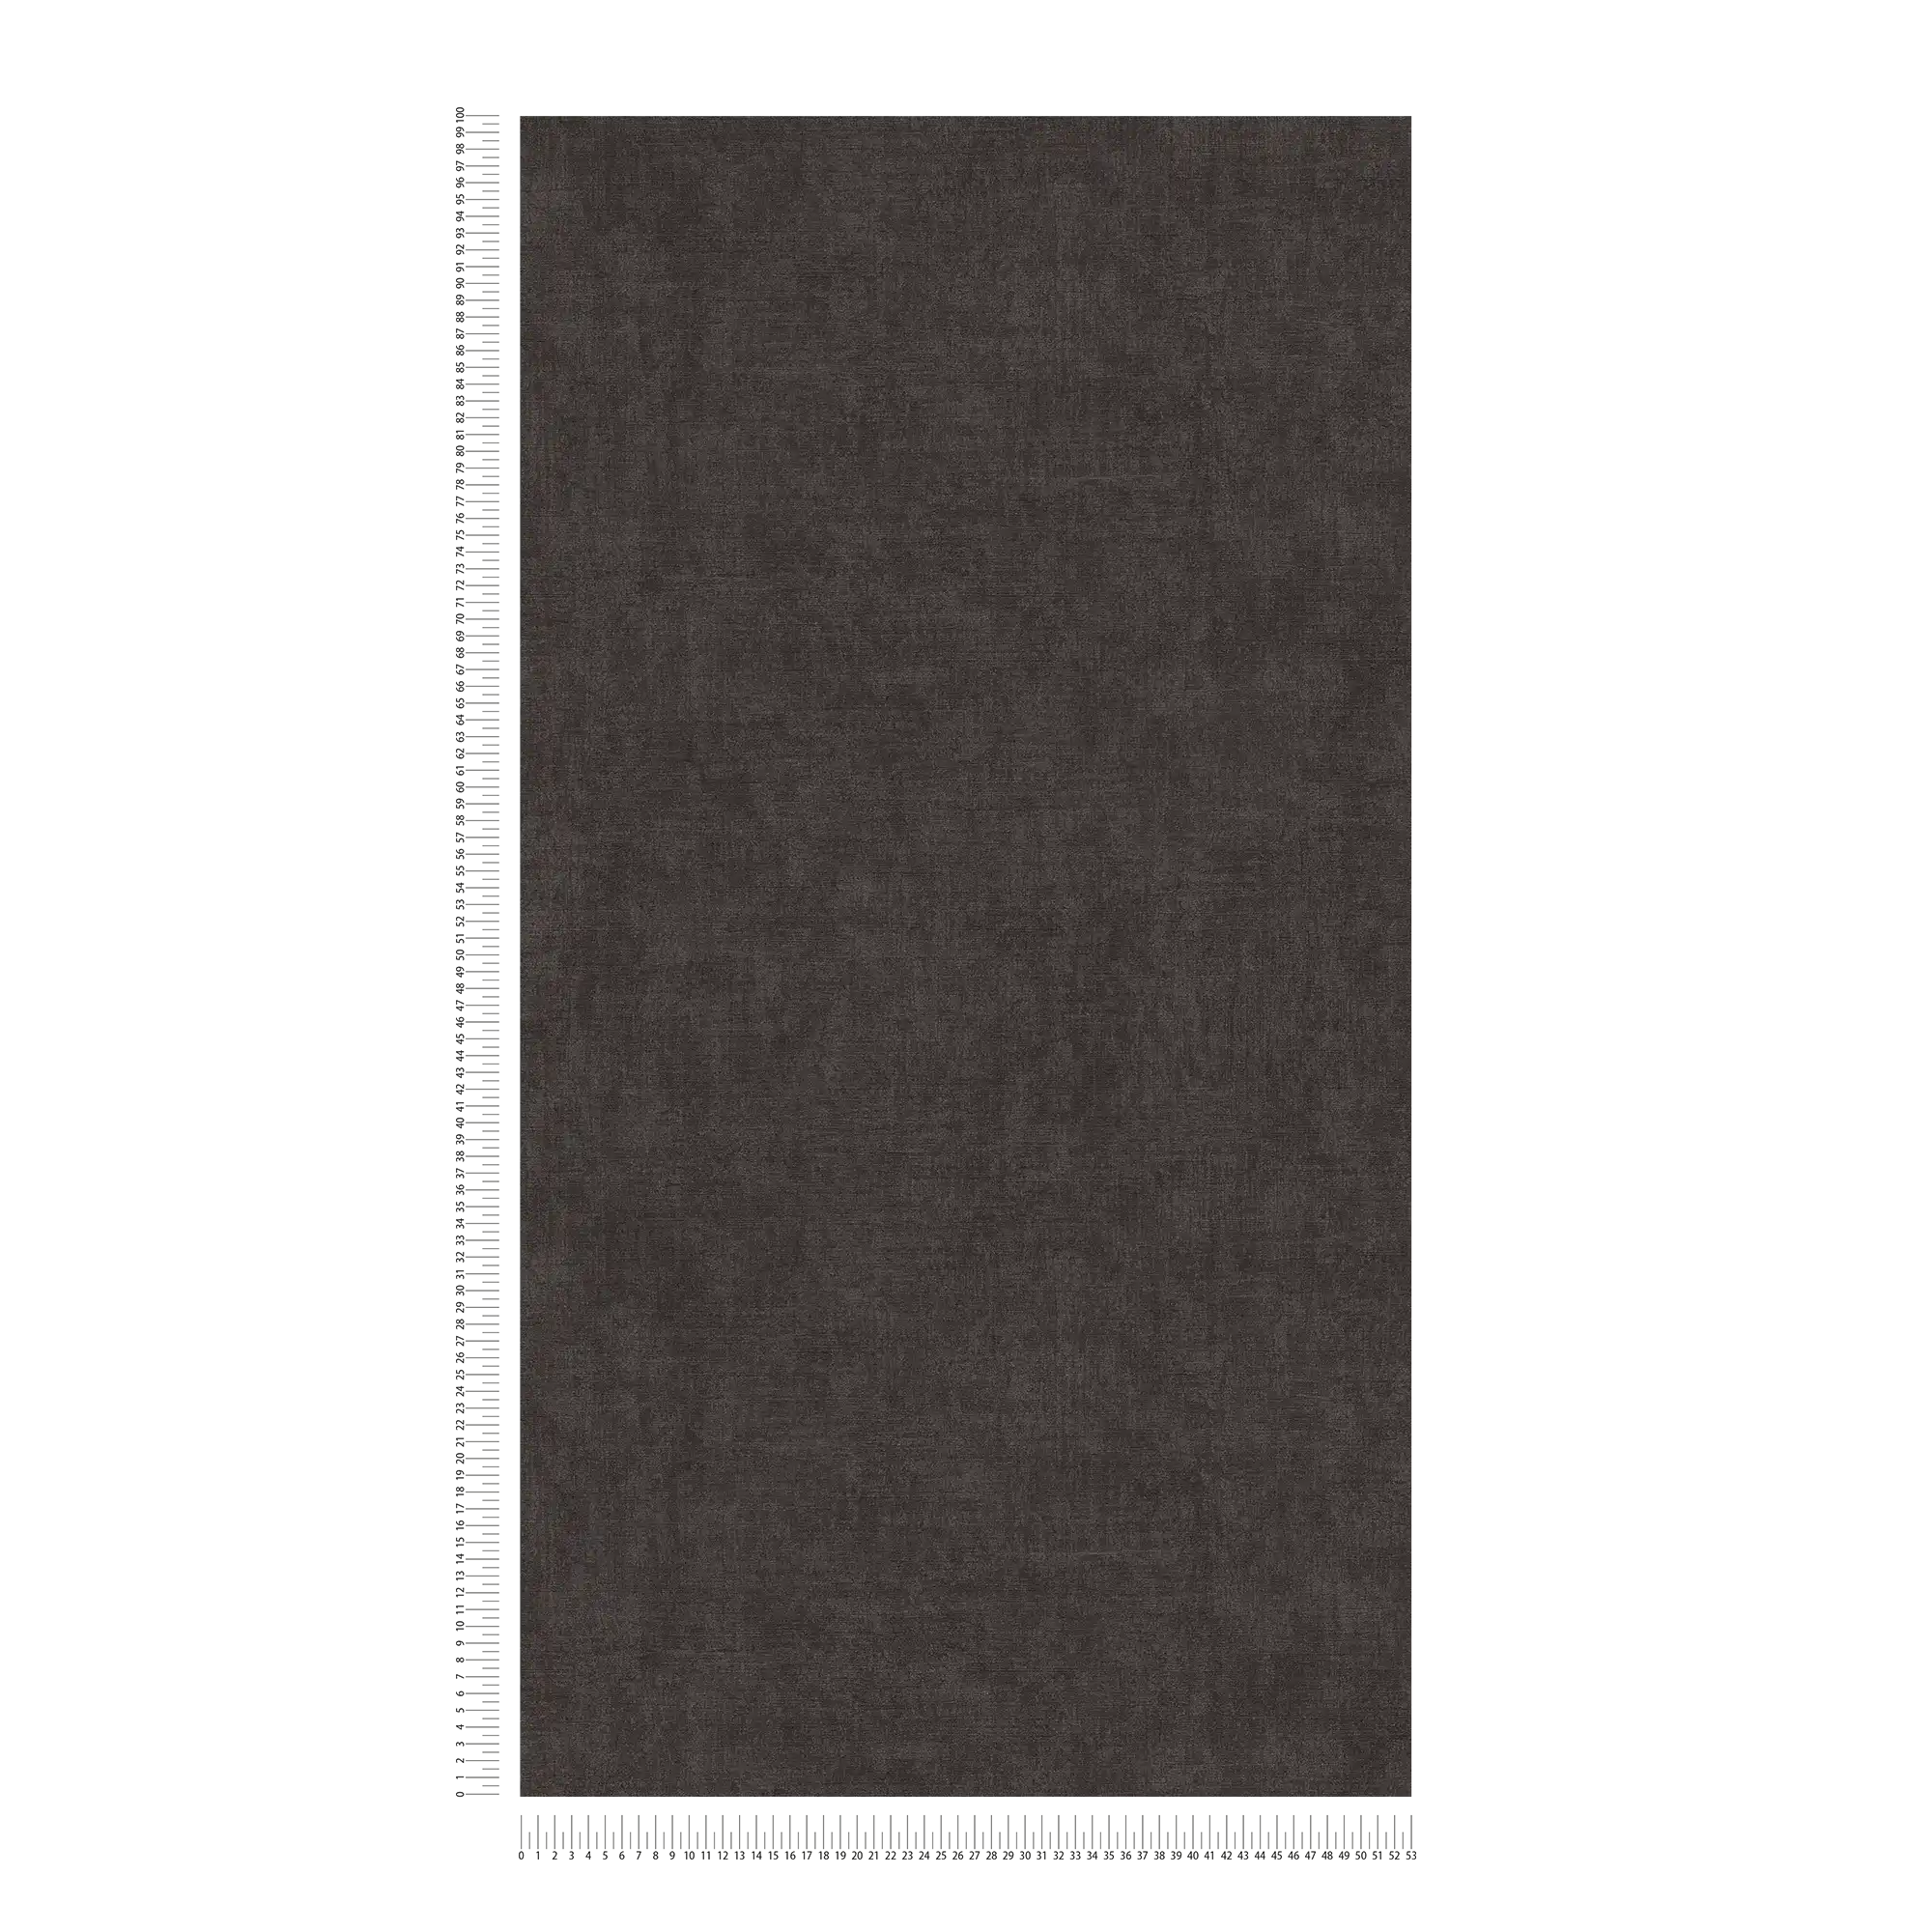             Non-woven wallpaper plain, mottled, textured pattern - brown
        